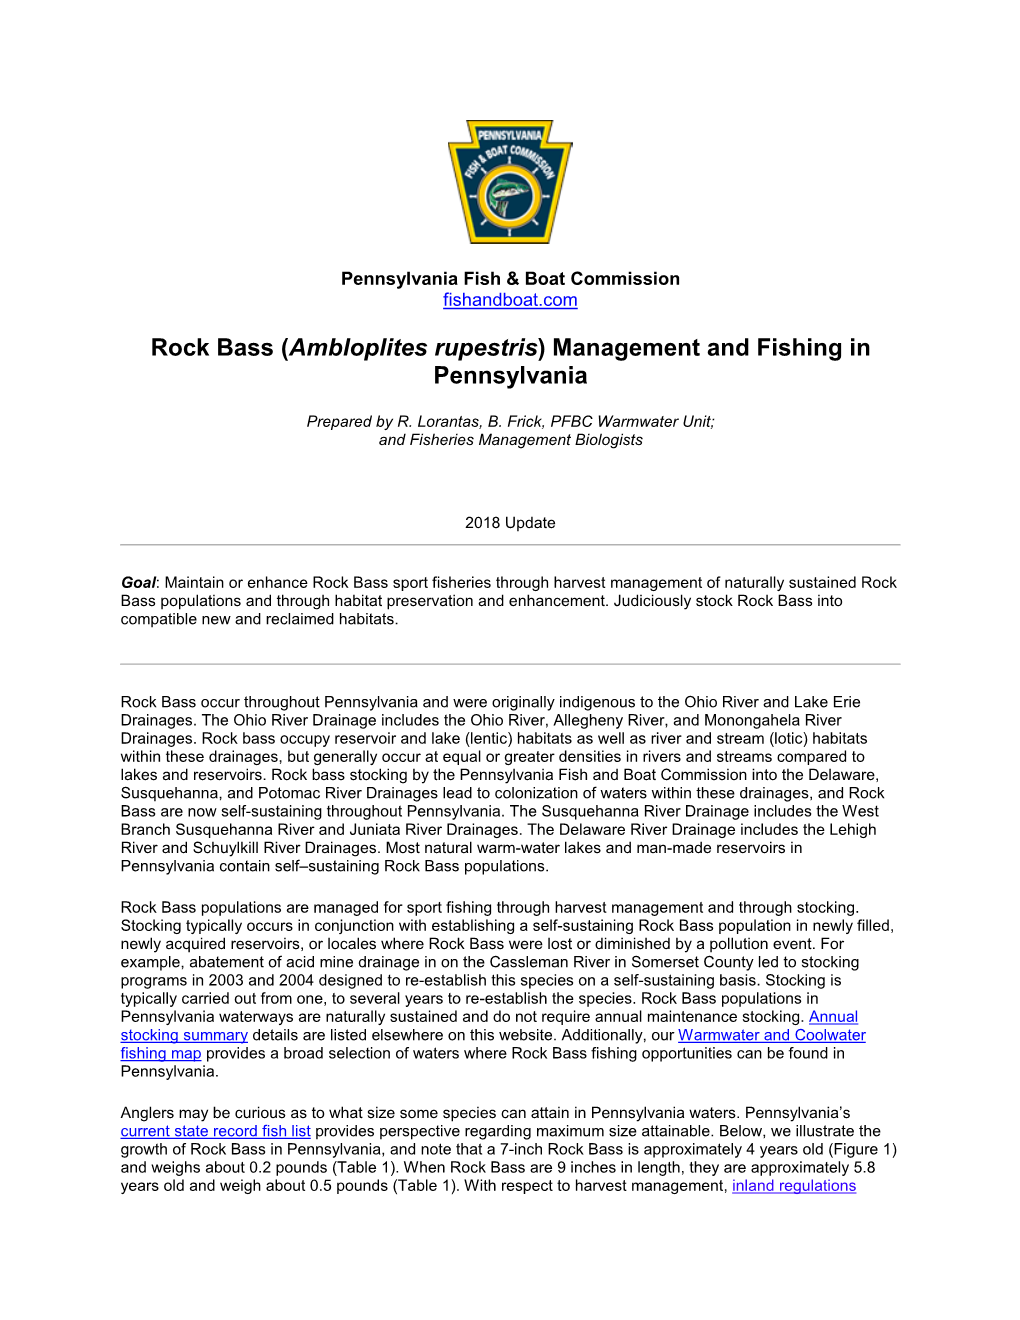 Rock Bass (Ambloplites Rupestris) Management and Fishing in Pennsylvania